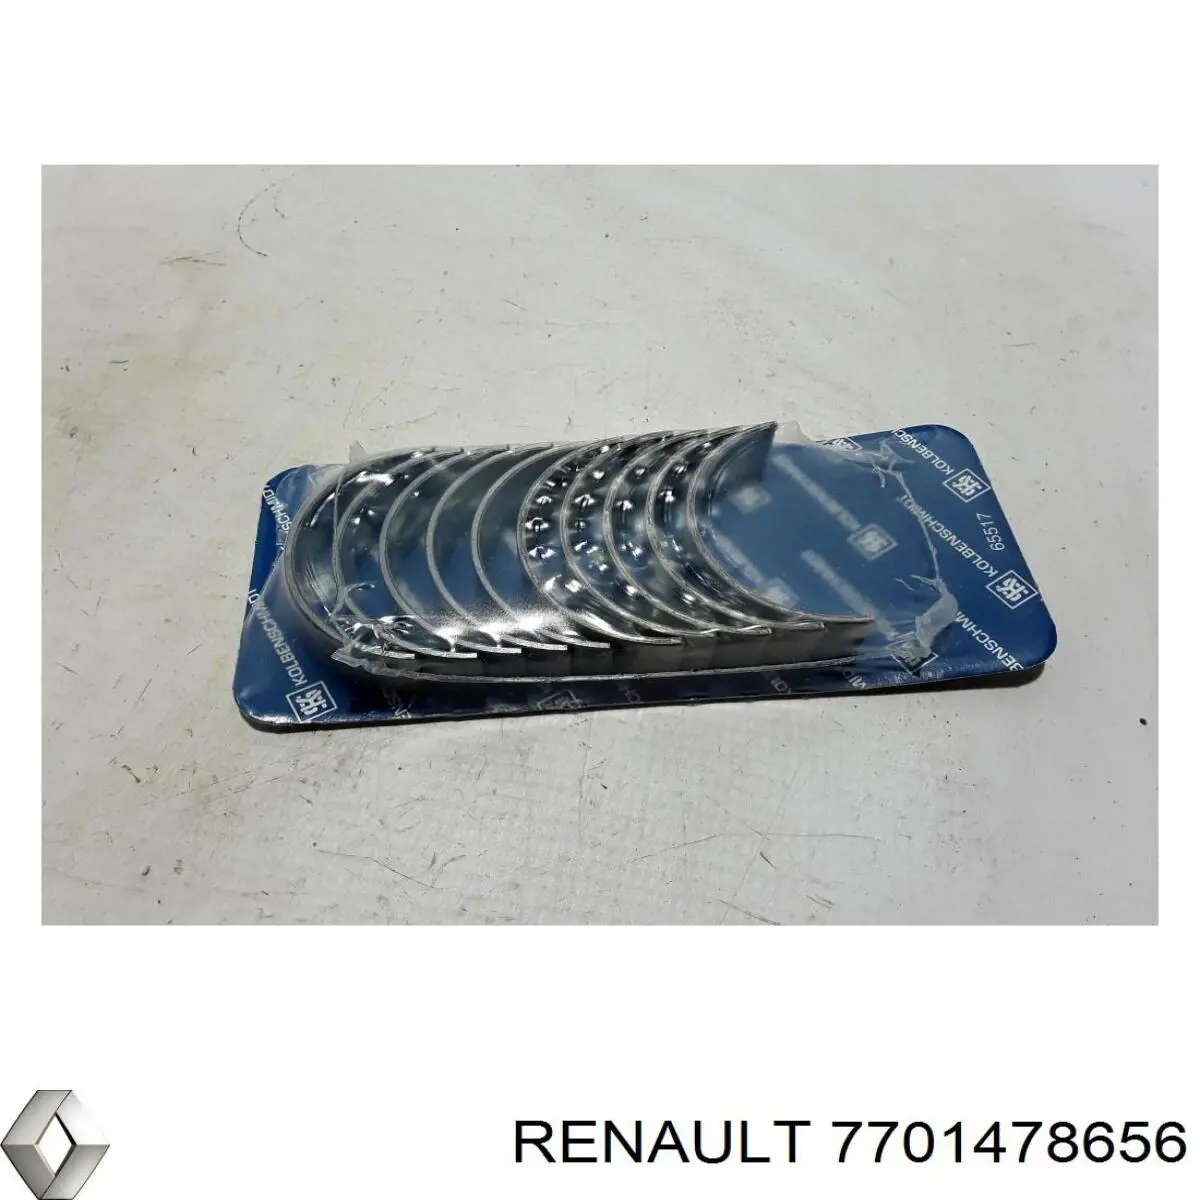 7701478656 Renault (RVI) вкладыши коленвала коренные, комплект, стандарт (std)